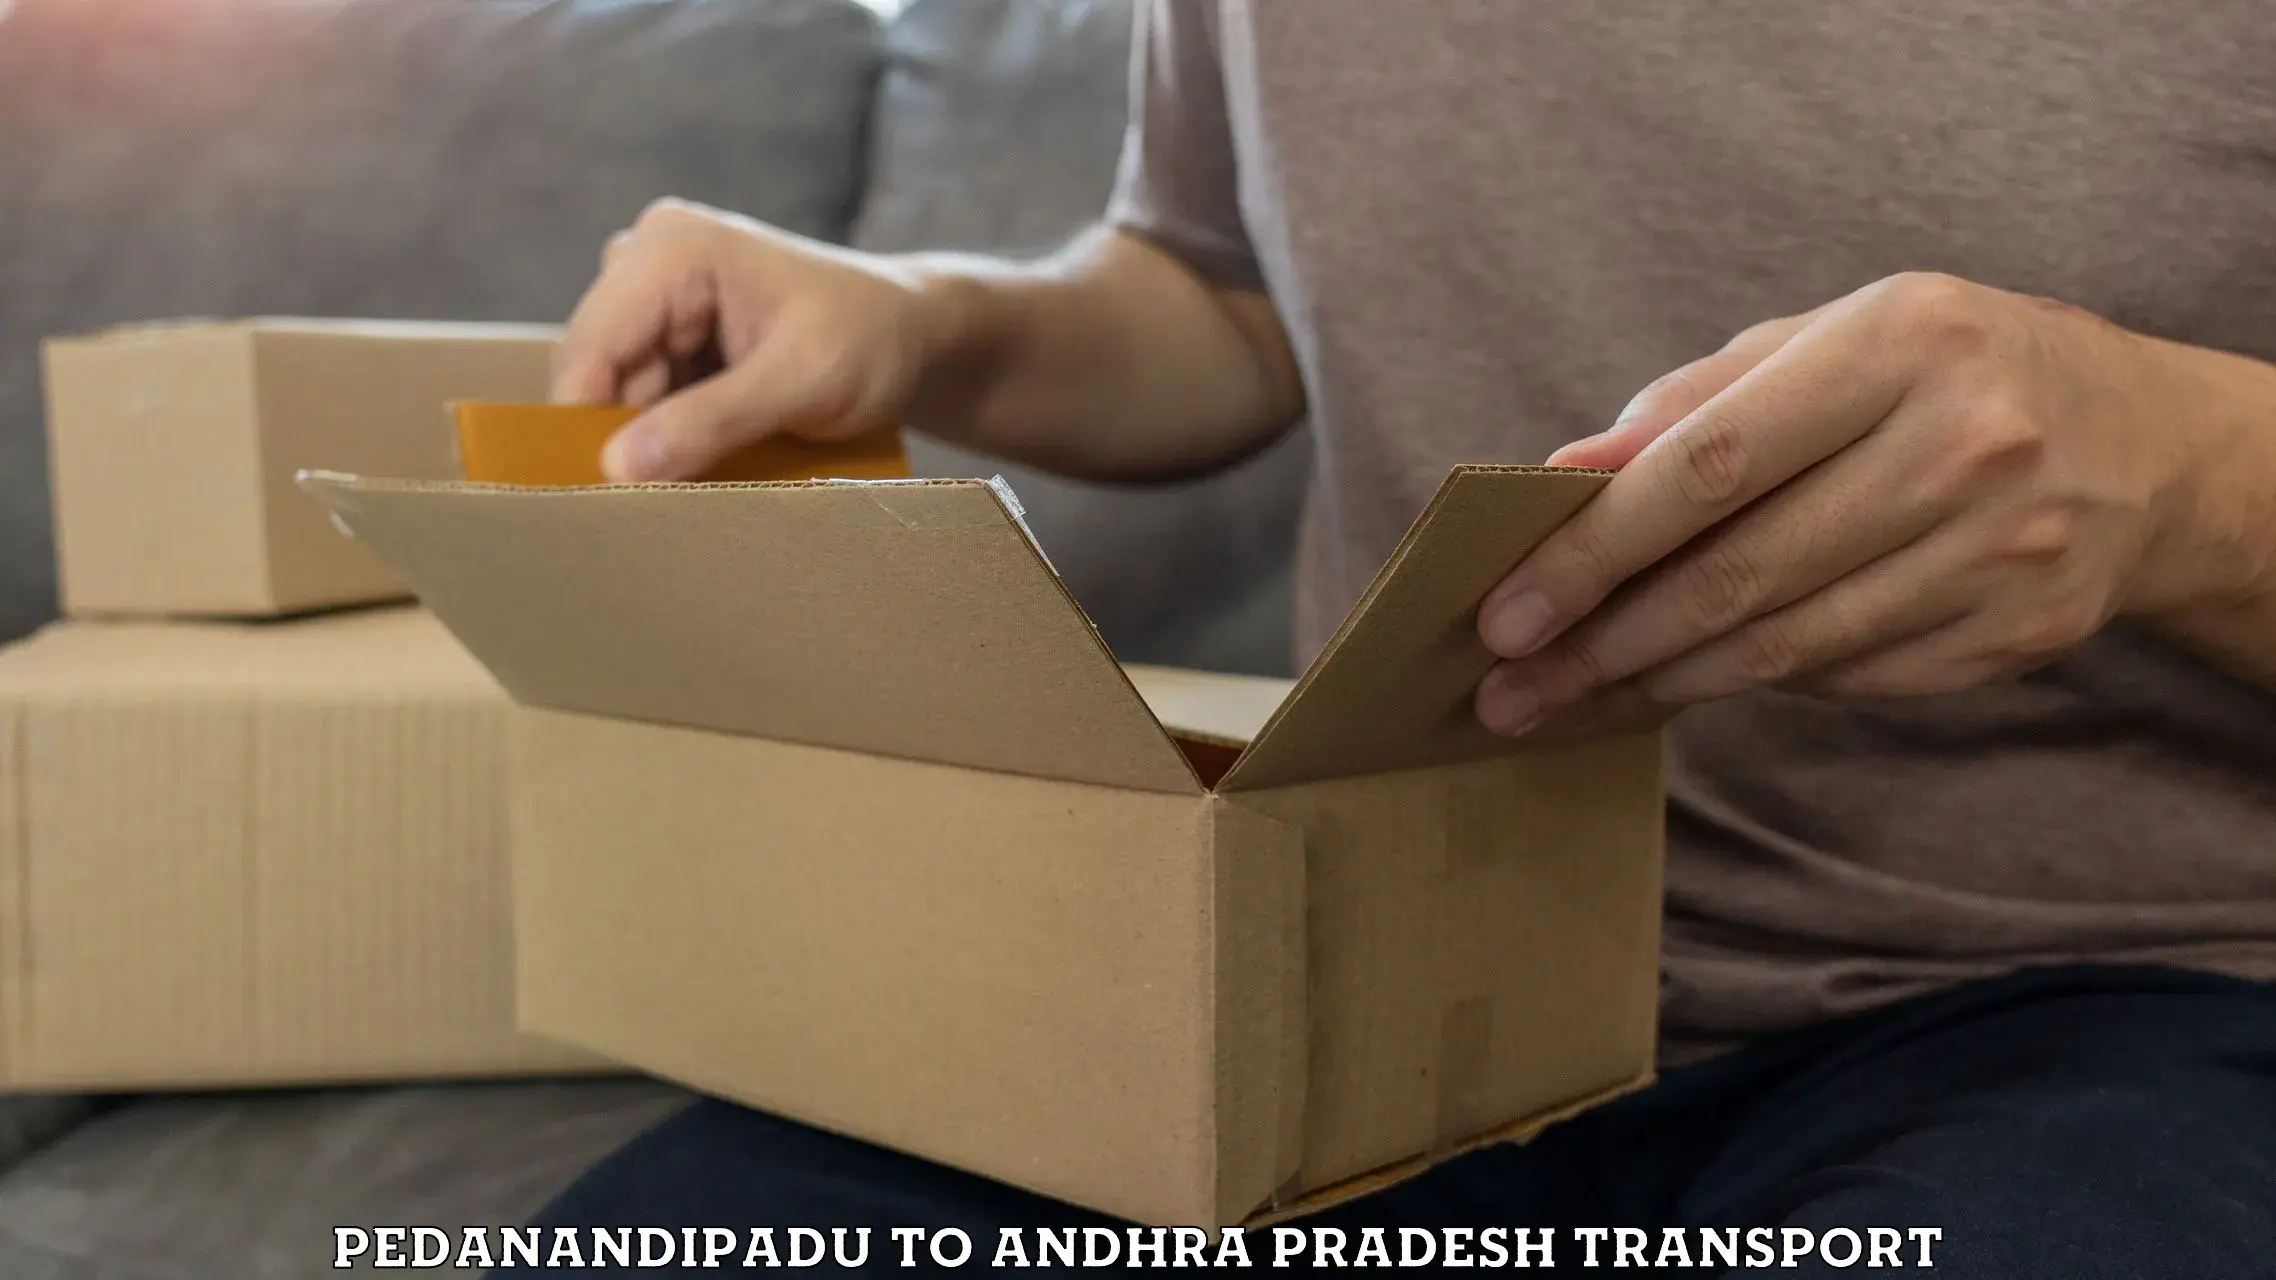 Transport in sharing in Pedanandipadu to Etcherla